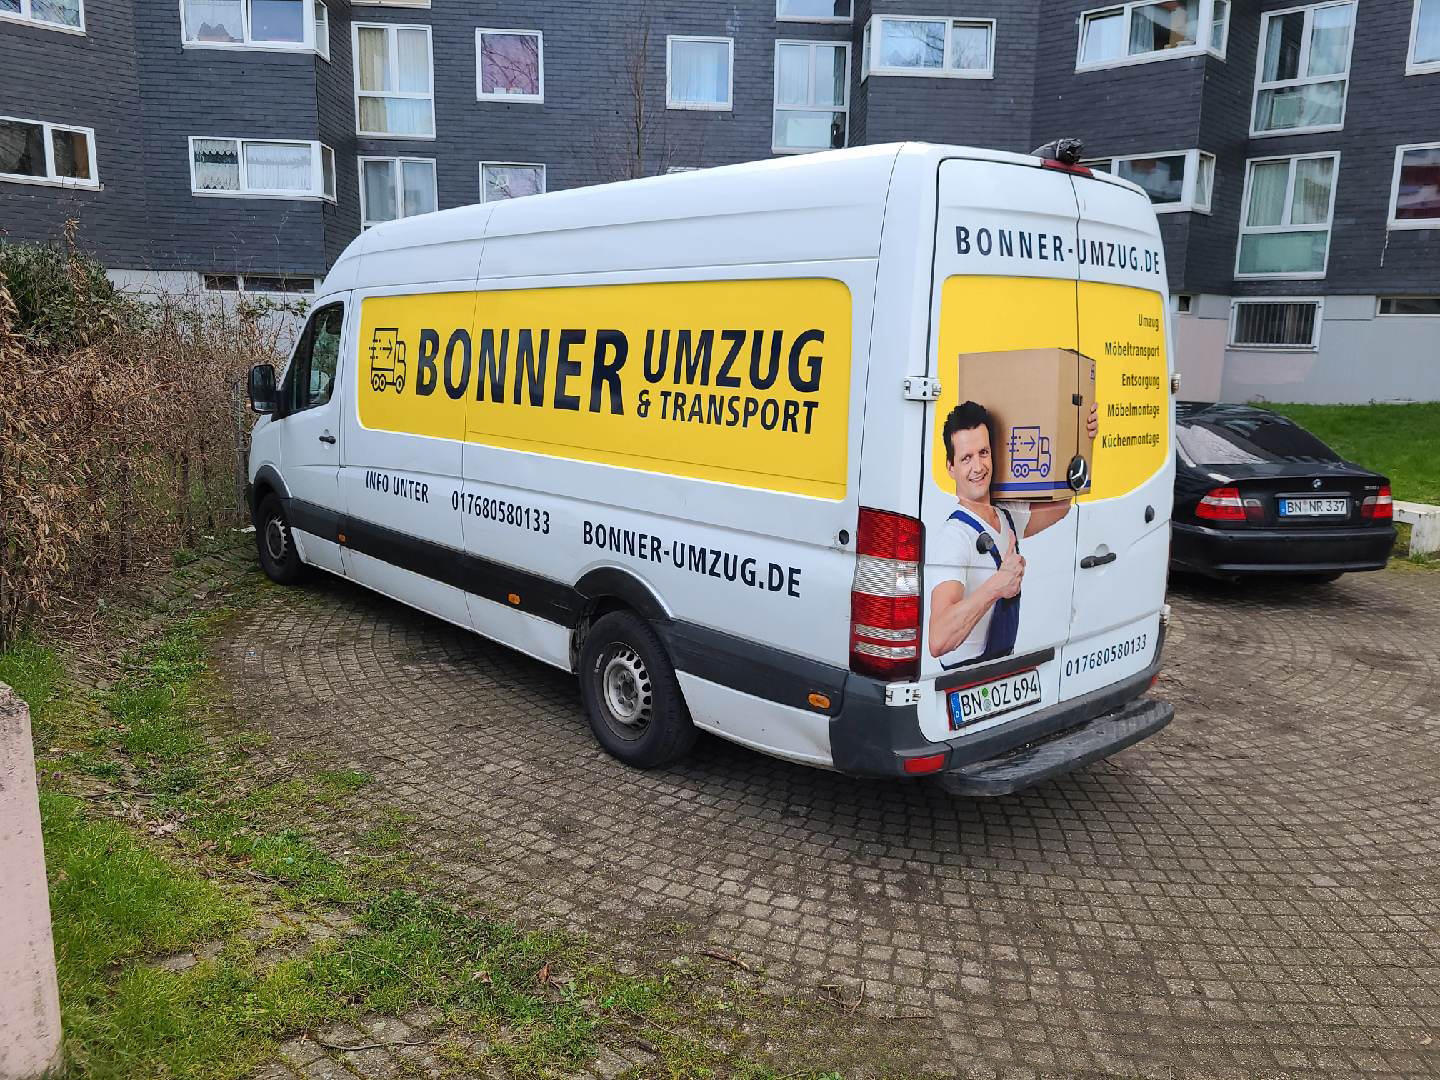 Bonner Umzug & Transport